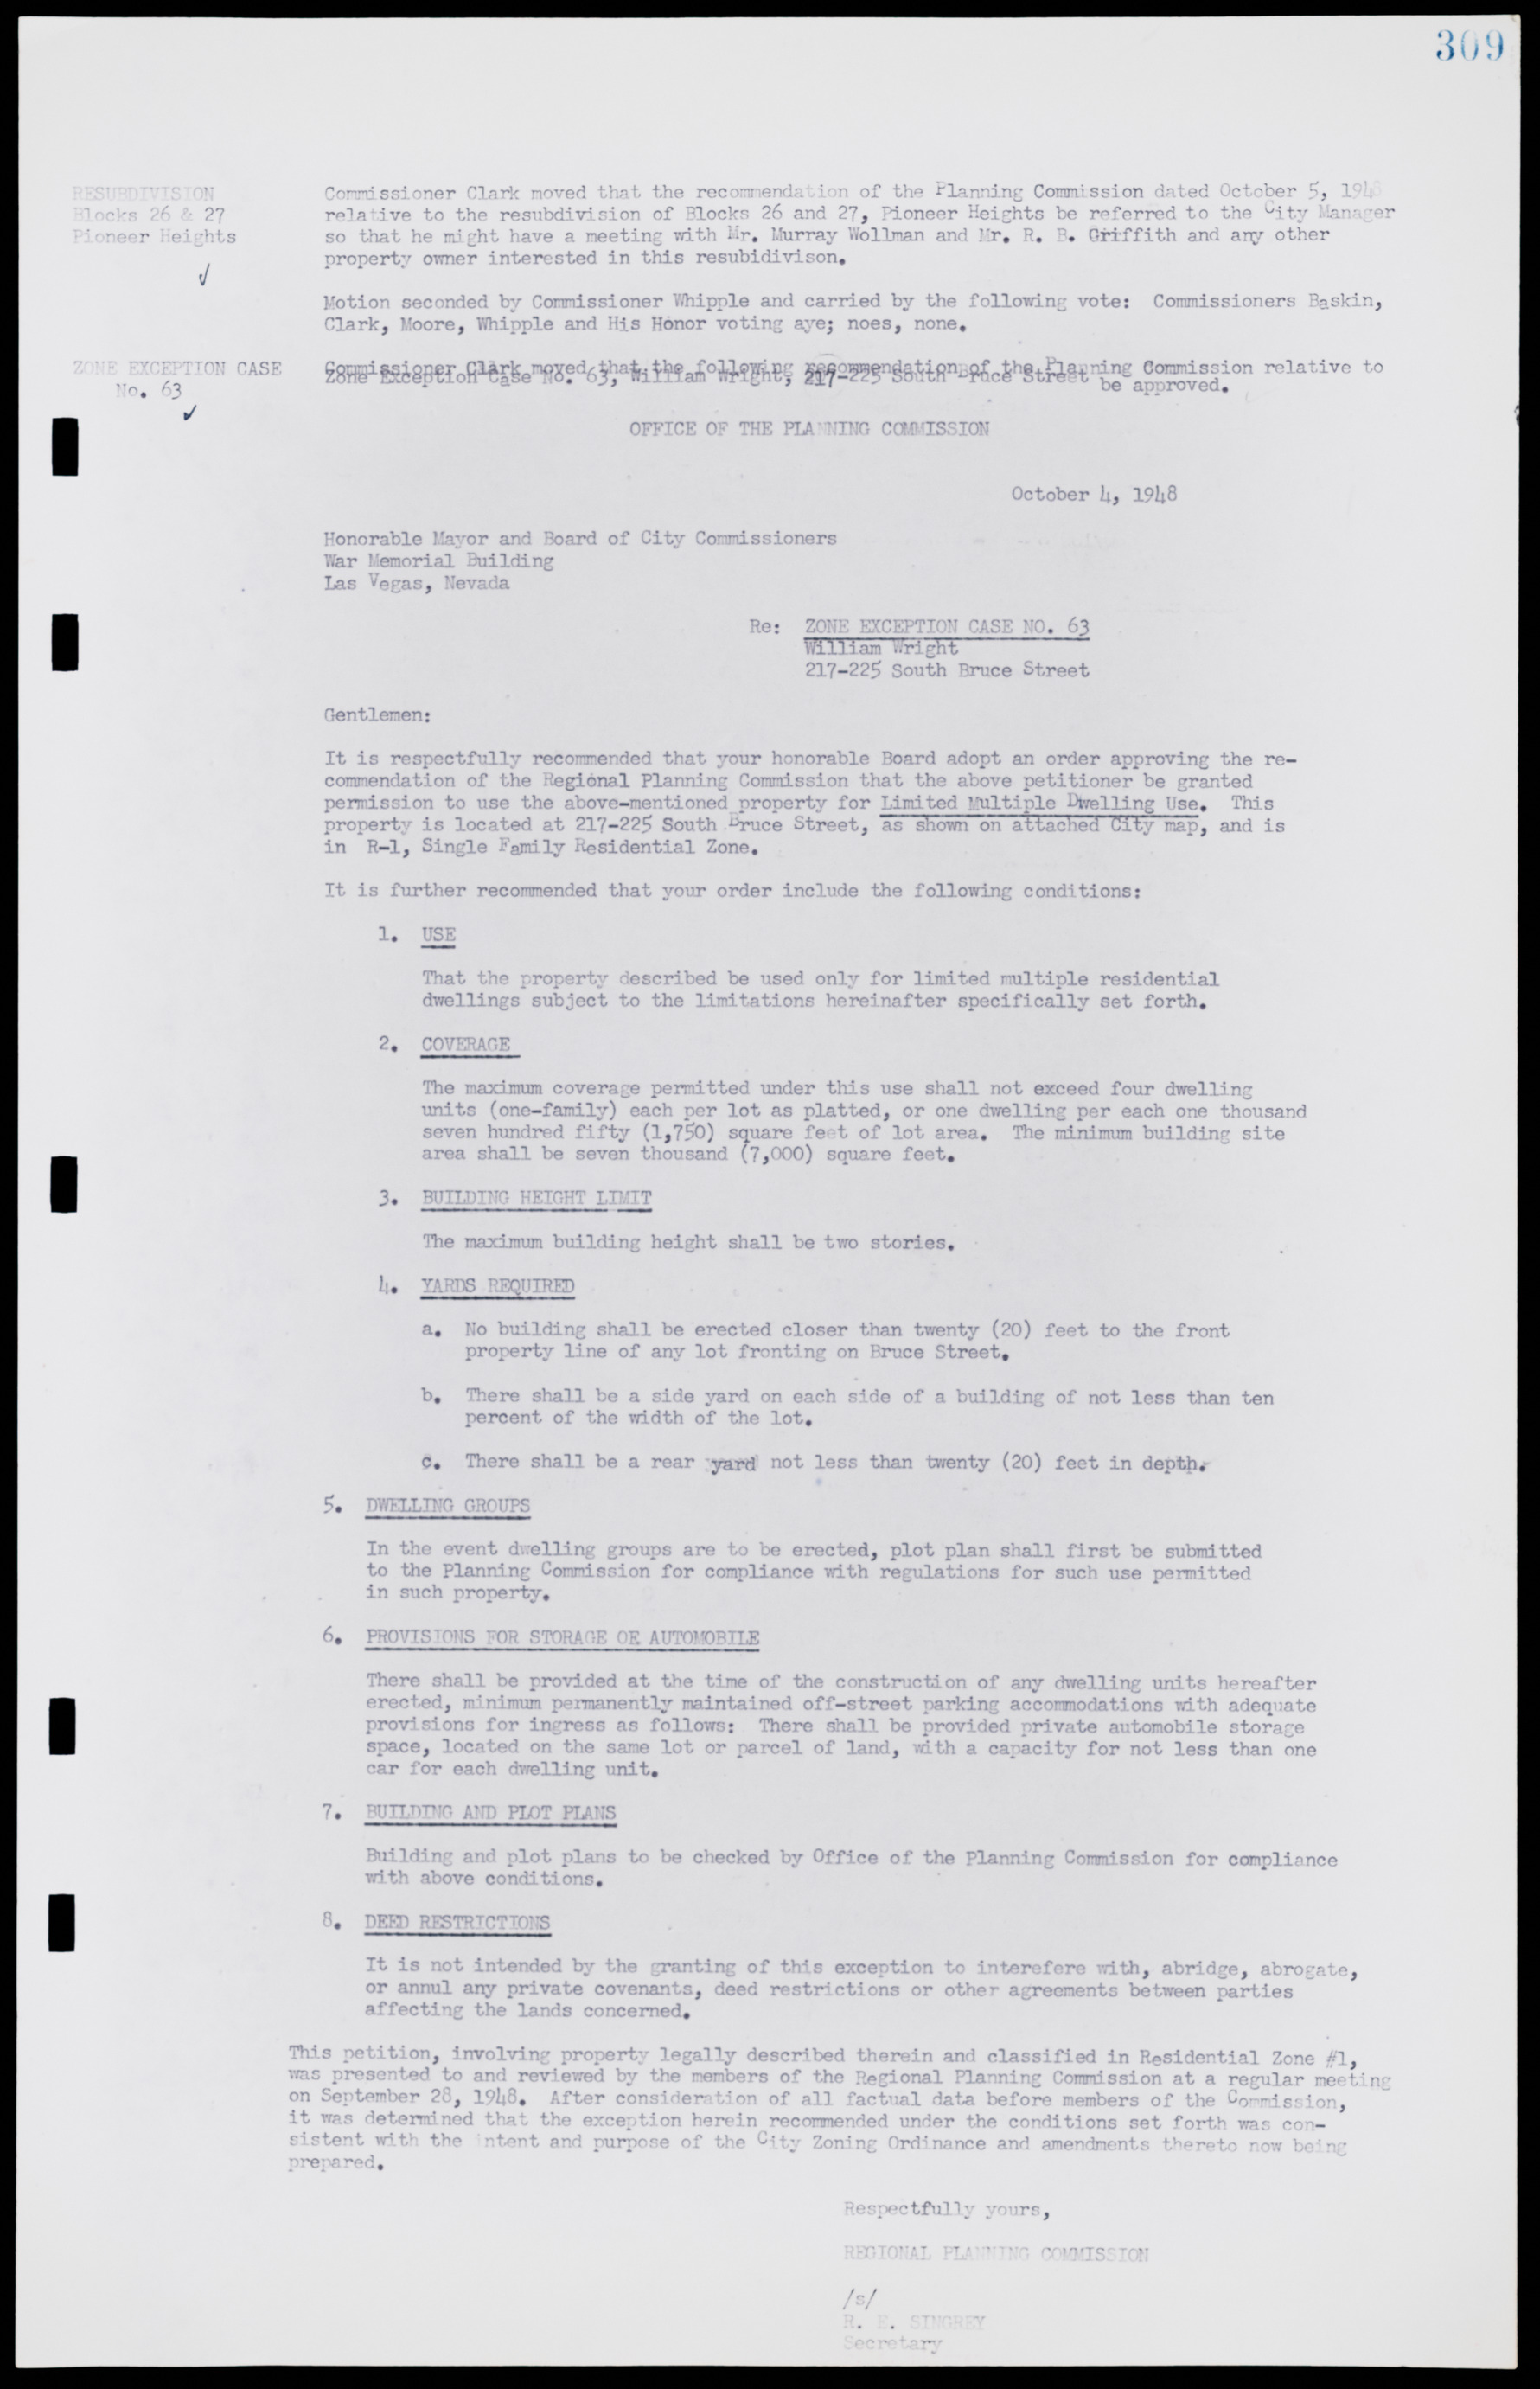 Las Vegas City Commission Minutes, January 7, 1947 to October 26, 1949, lvc000006-333